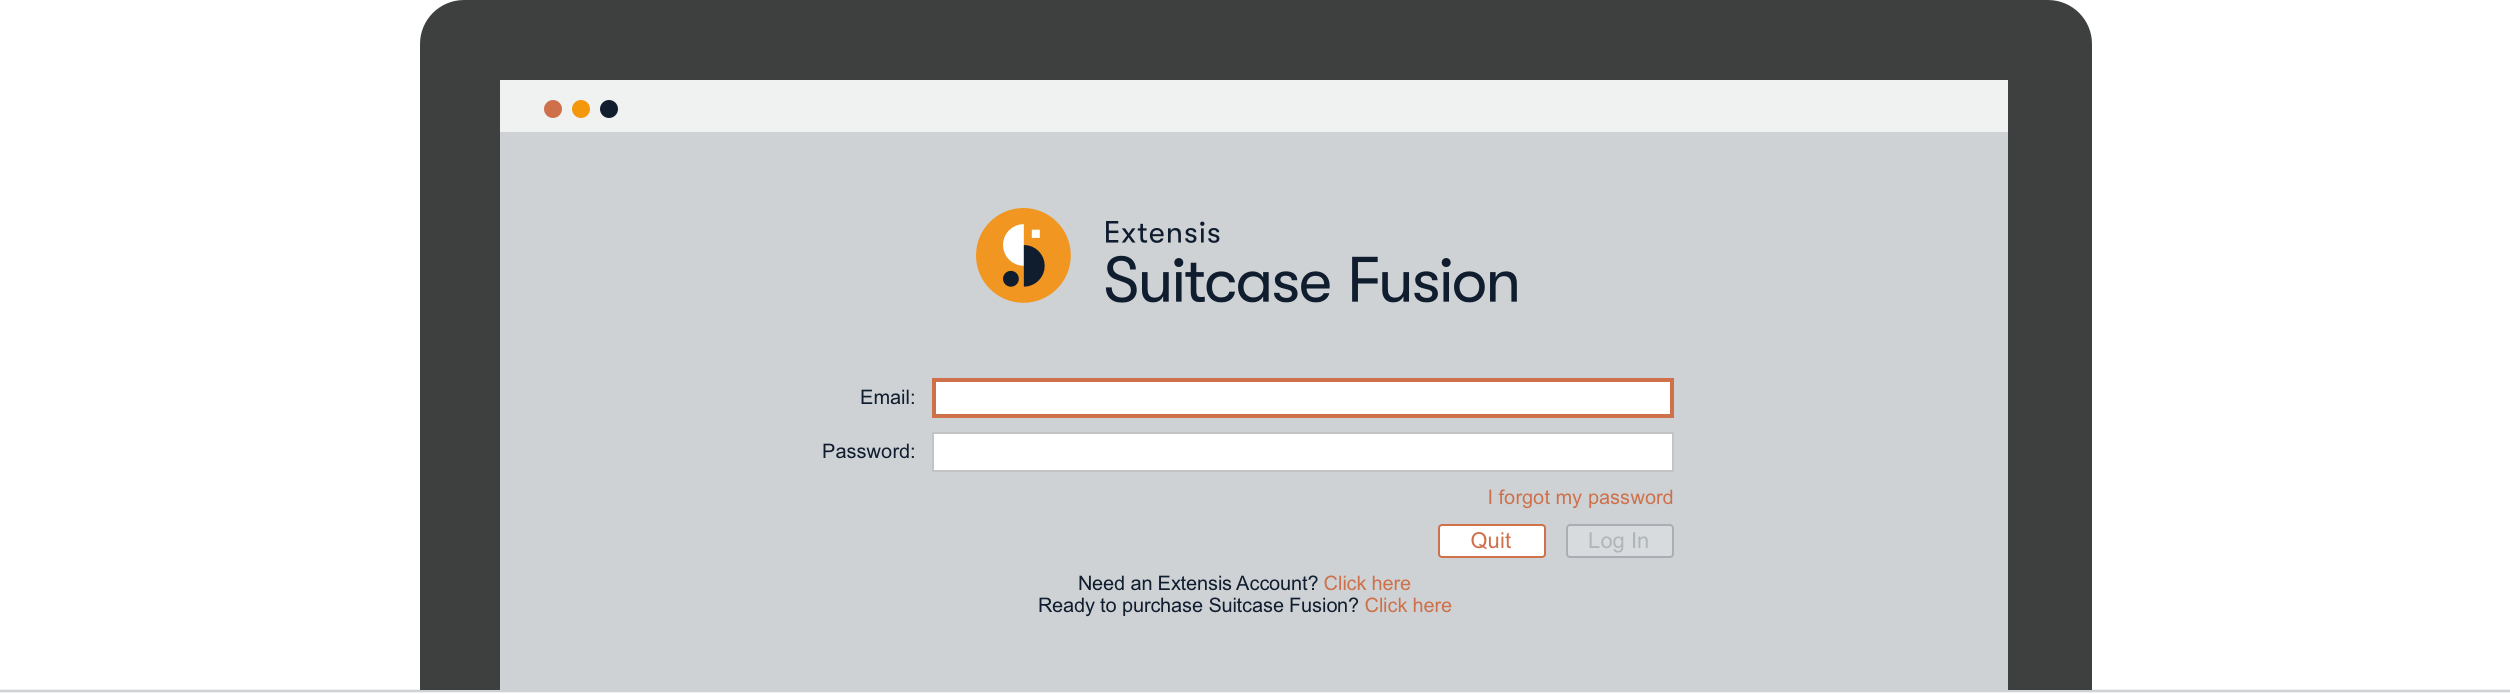 suitcase fusion 6 cannot activate or deactivate fonts